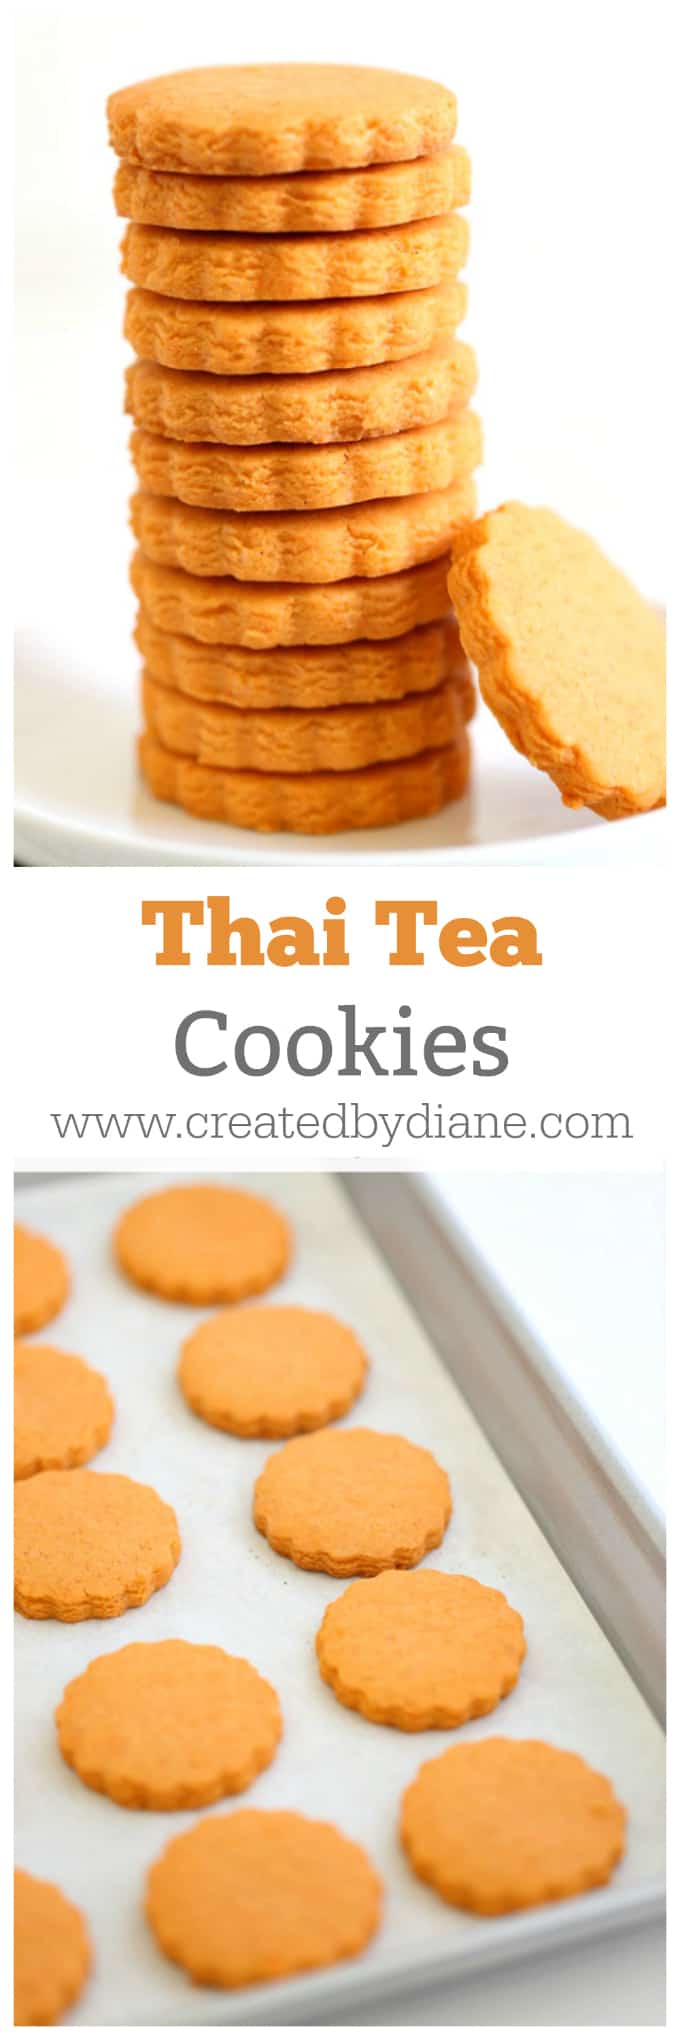 Thai Tea Cookie Recipe Easy and Delicious Cookie www.createdbydiane.com